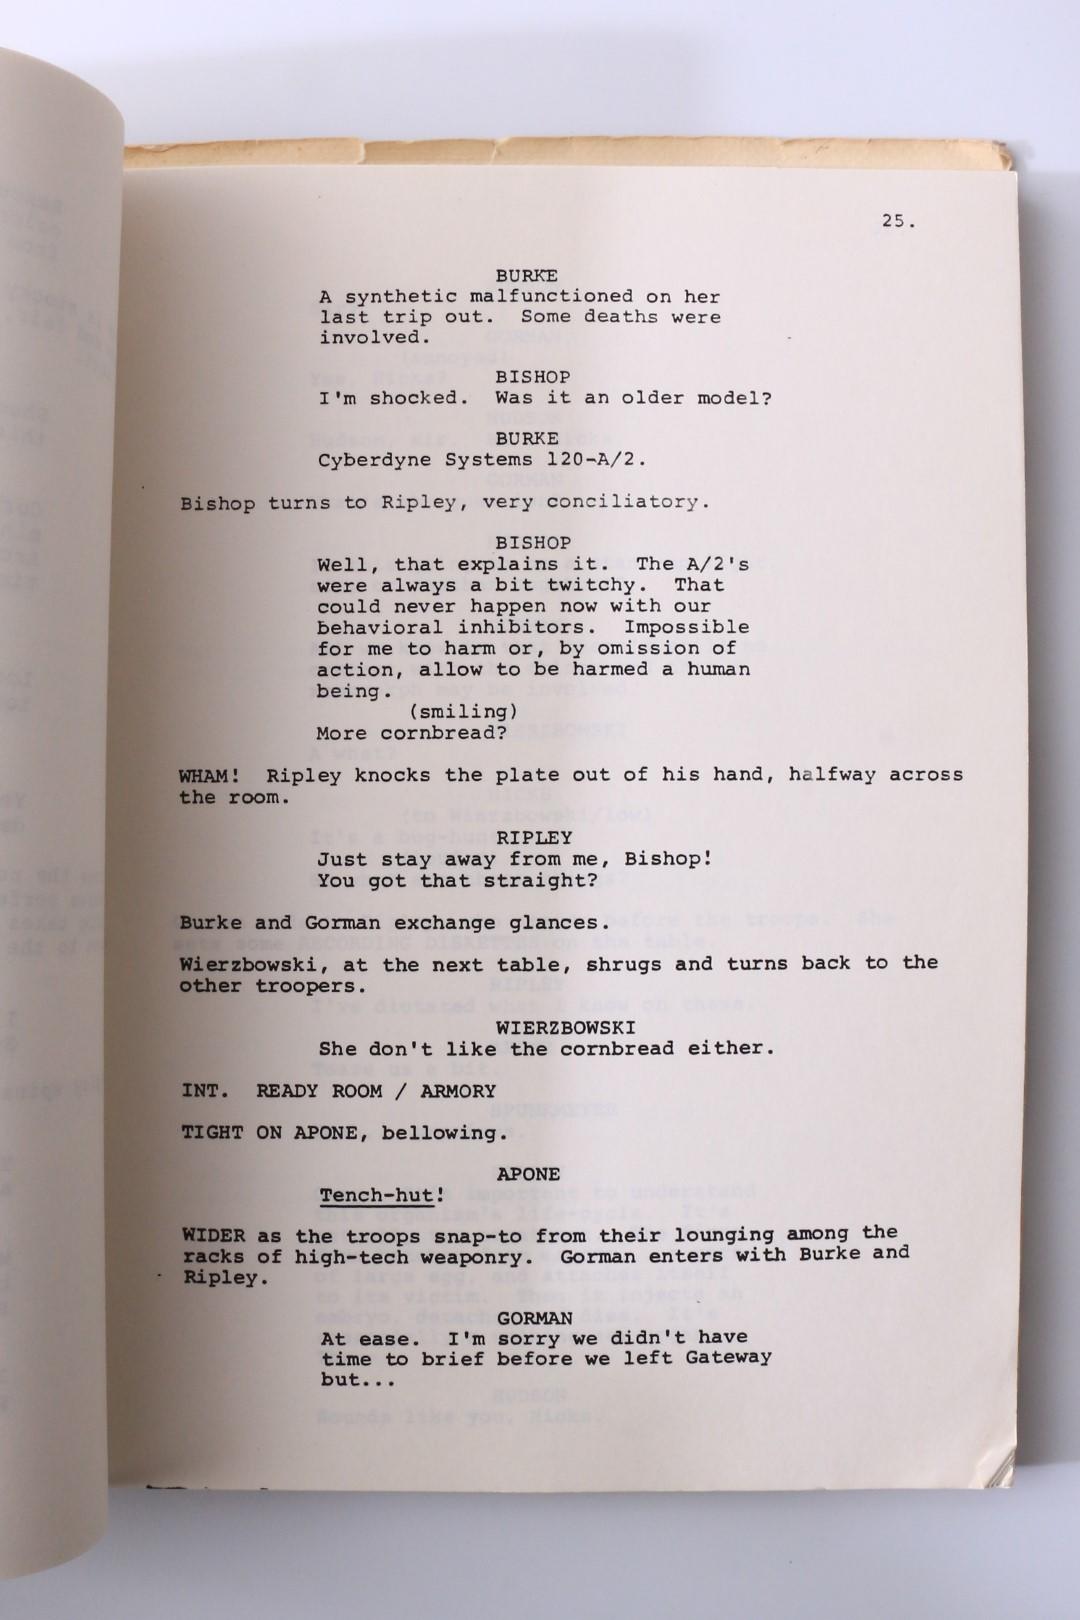 Walter Hill, David Giler w/ James Cameron - Alien Script w/ Aliens - Brandywine Productions, 1979-1985, Manuscript.